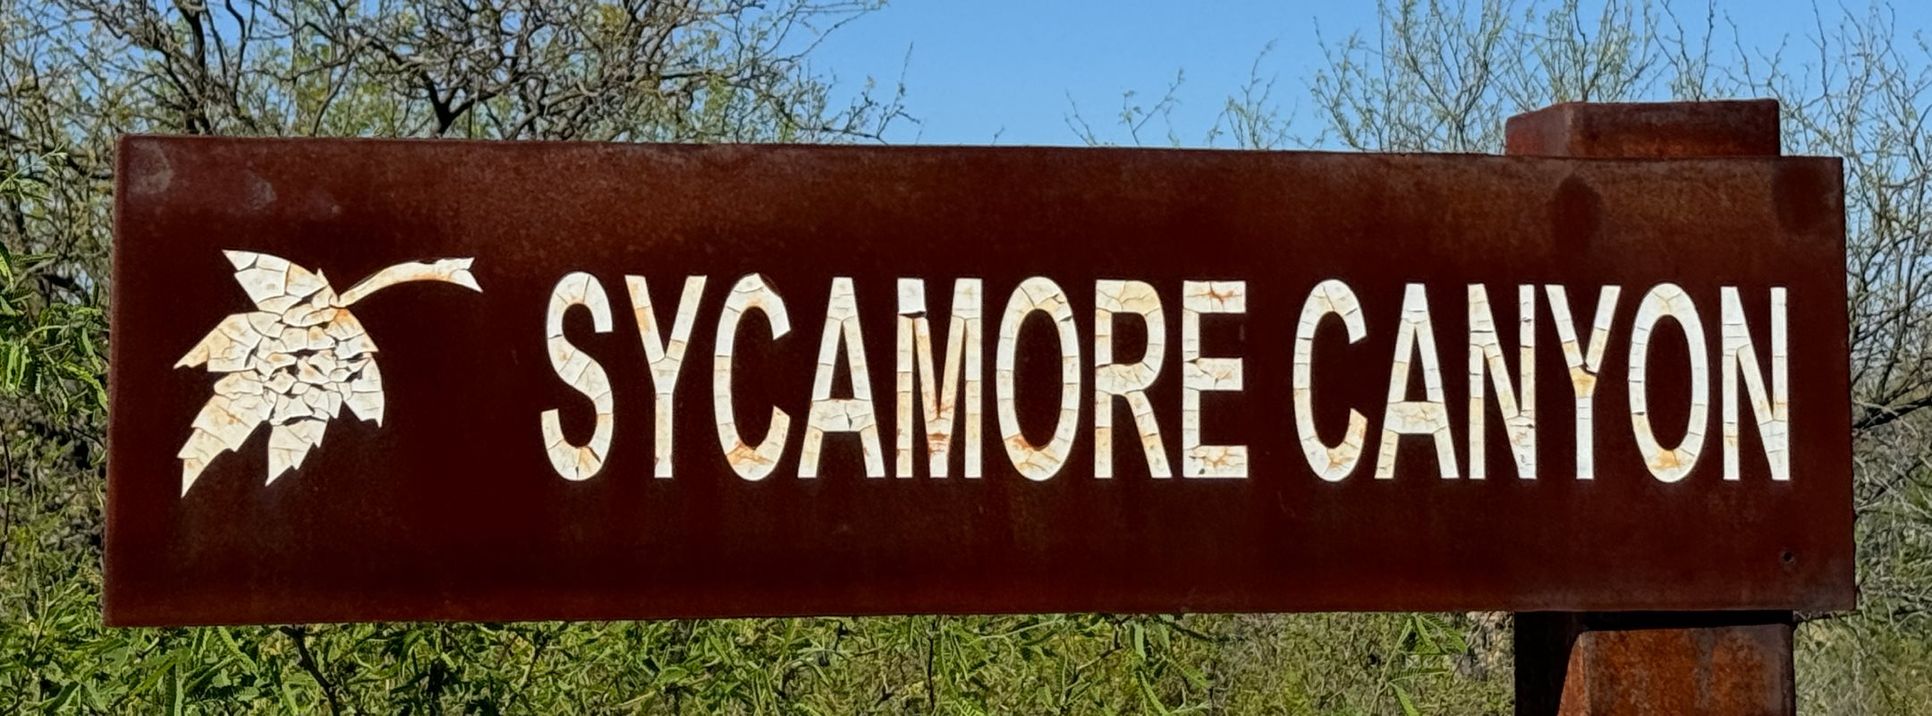 Sycamore canyon